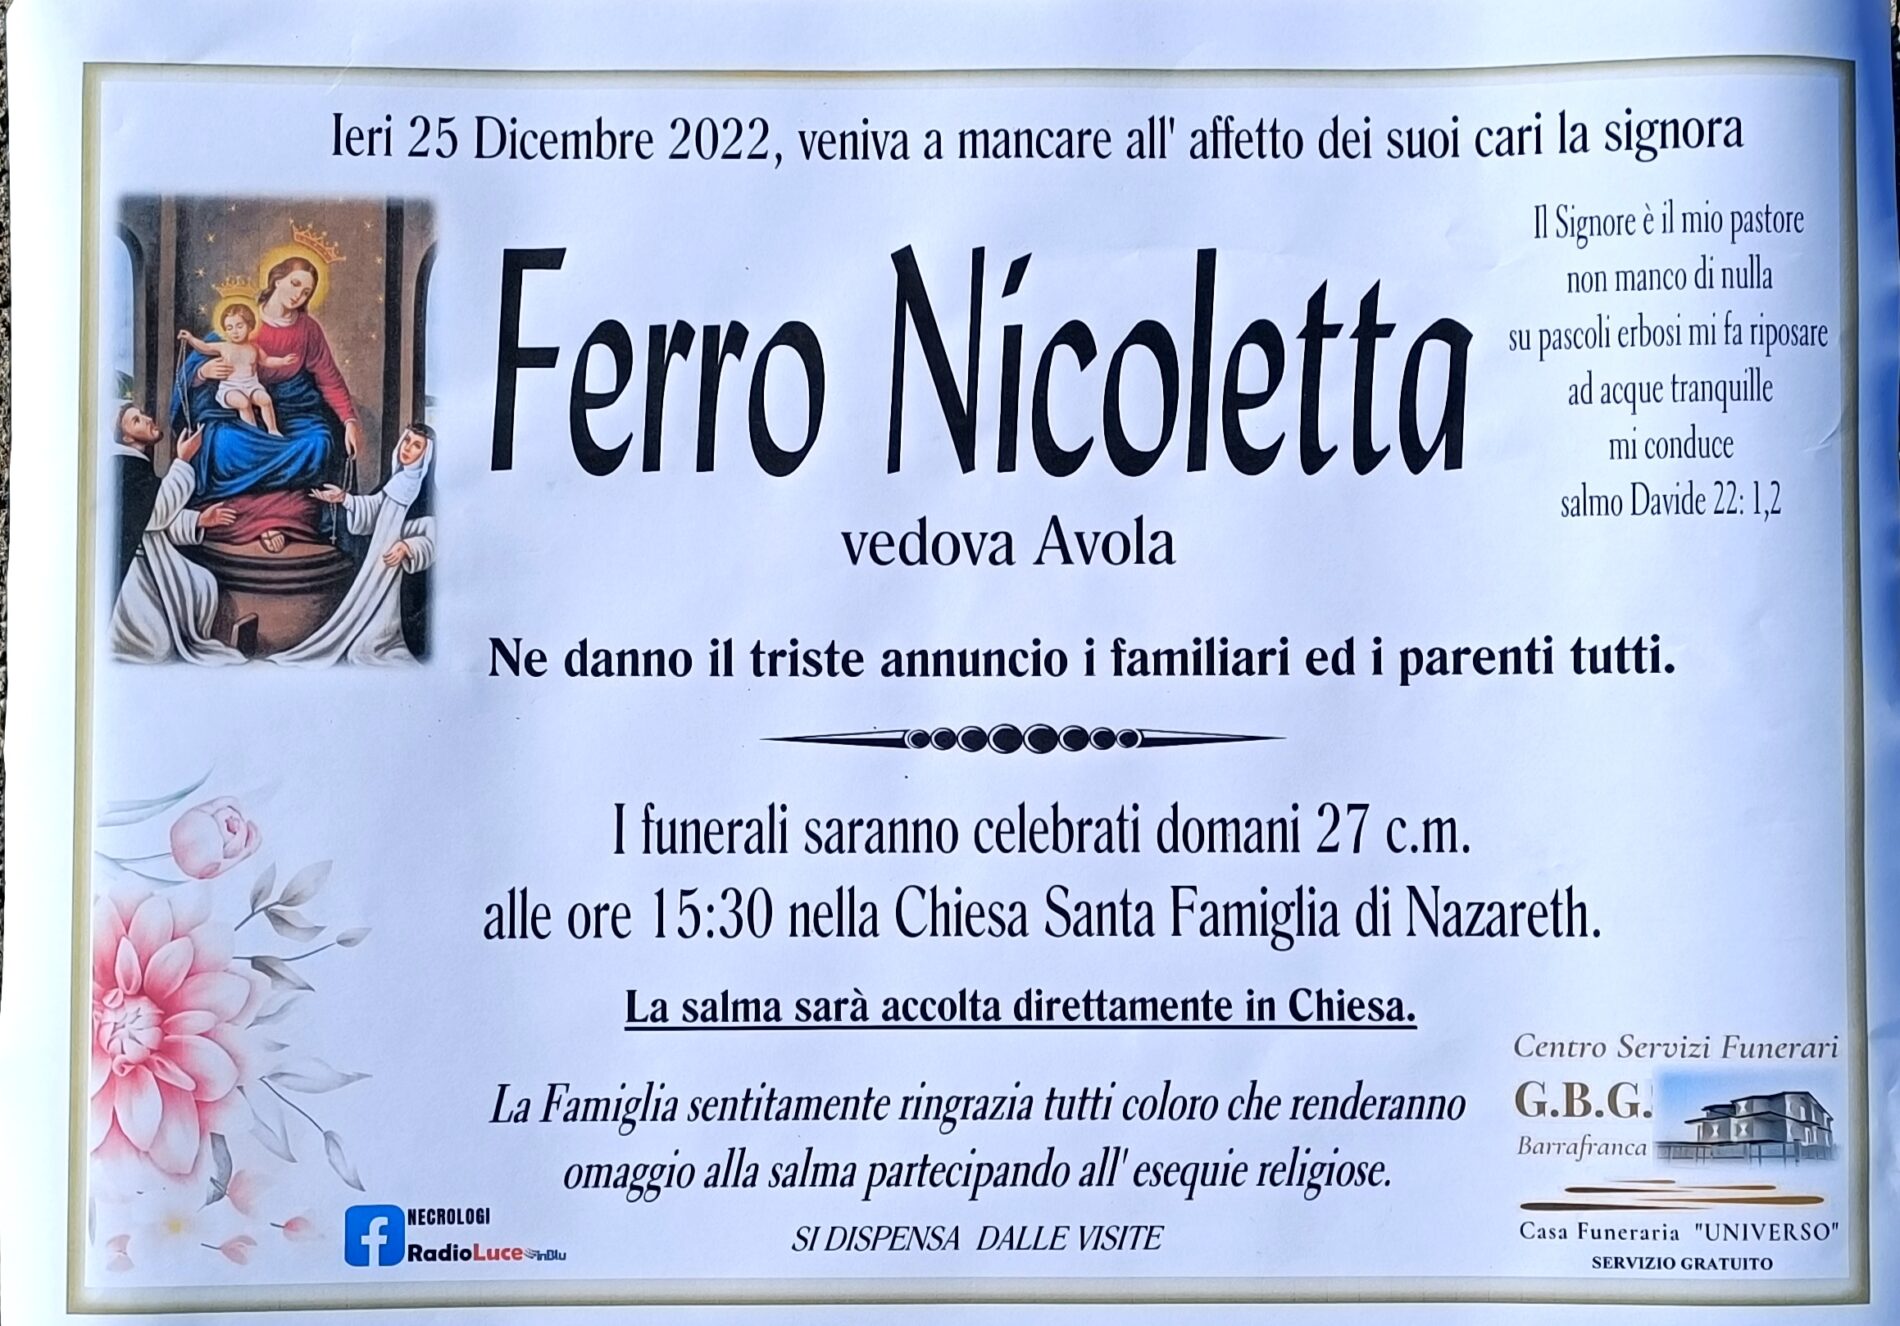 Annuncio servizi funerari agenzia G.B.G. Signora Ferro Nicoletta vedova Avola